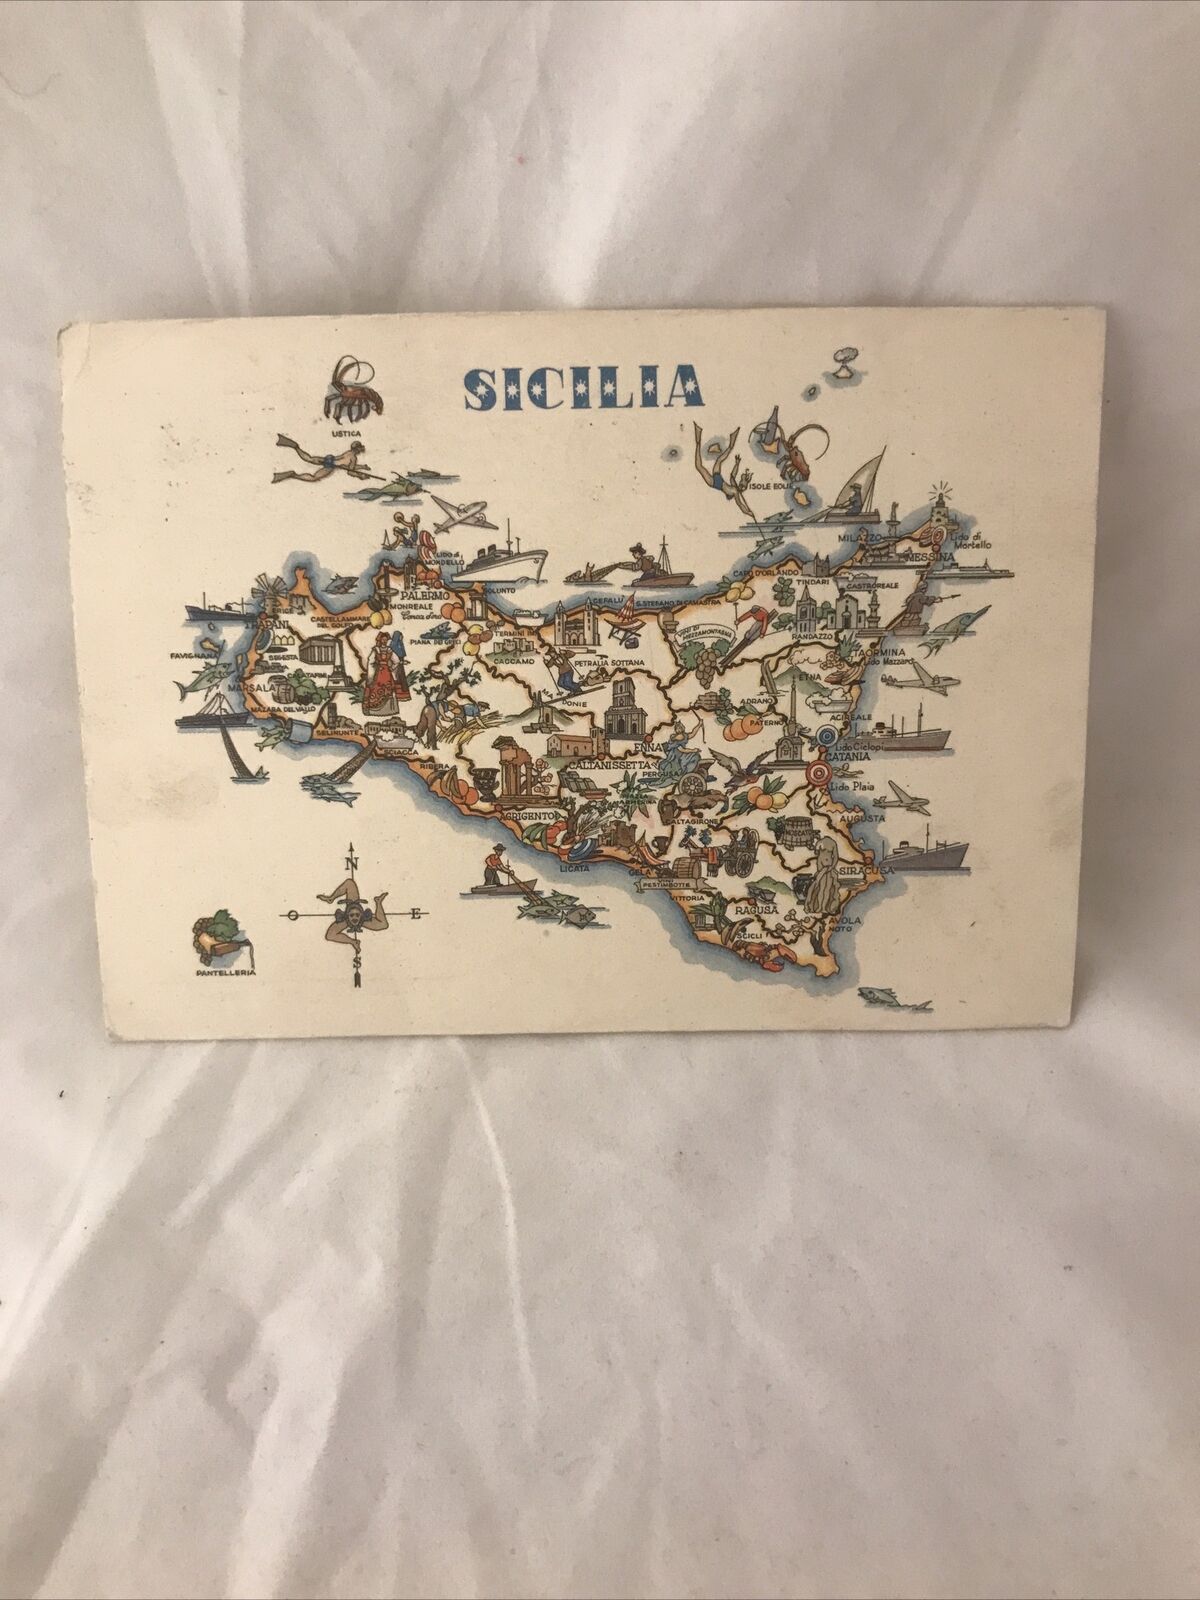 PC ADVERTISING Sicily SICILIA Vintage Postcard  June 11, 1953